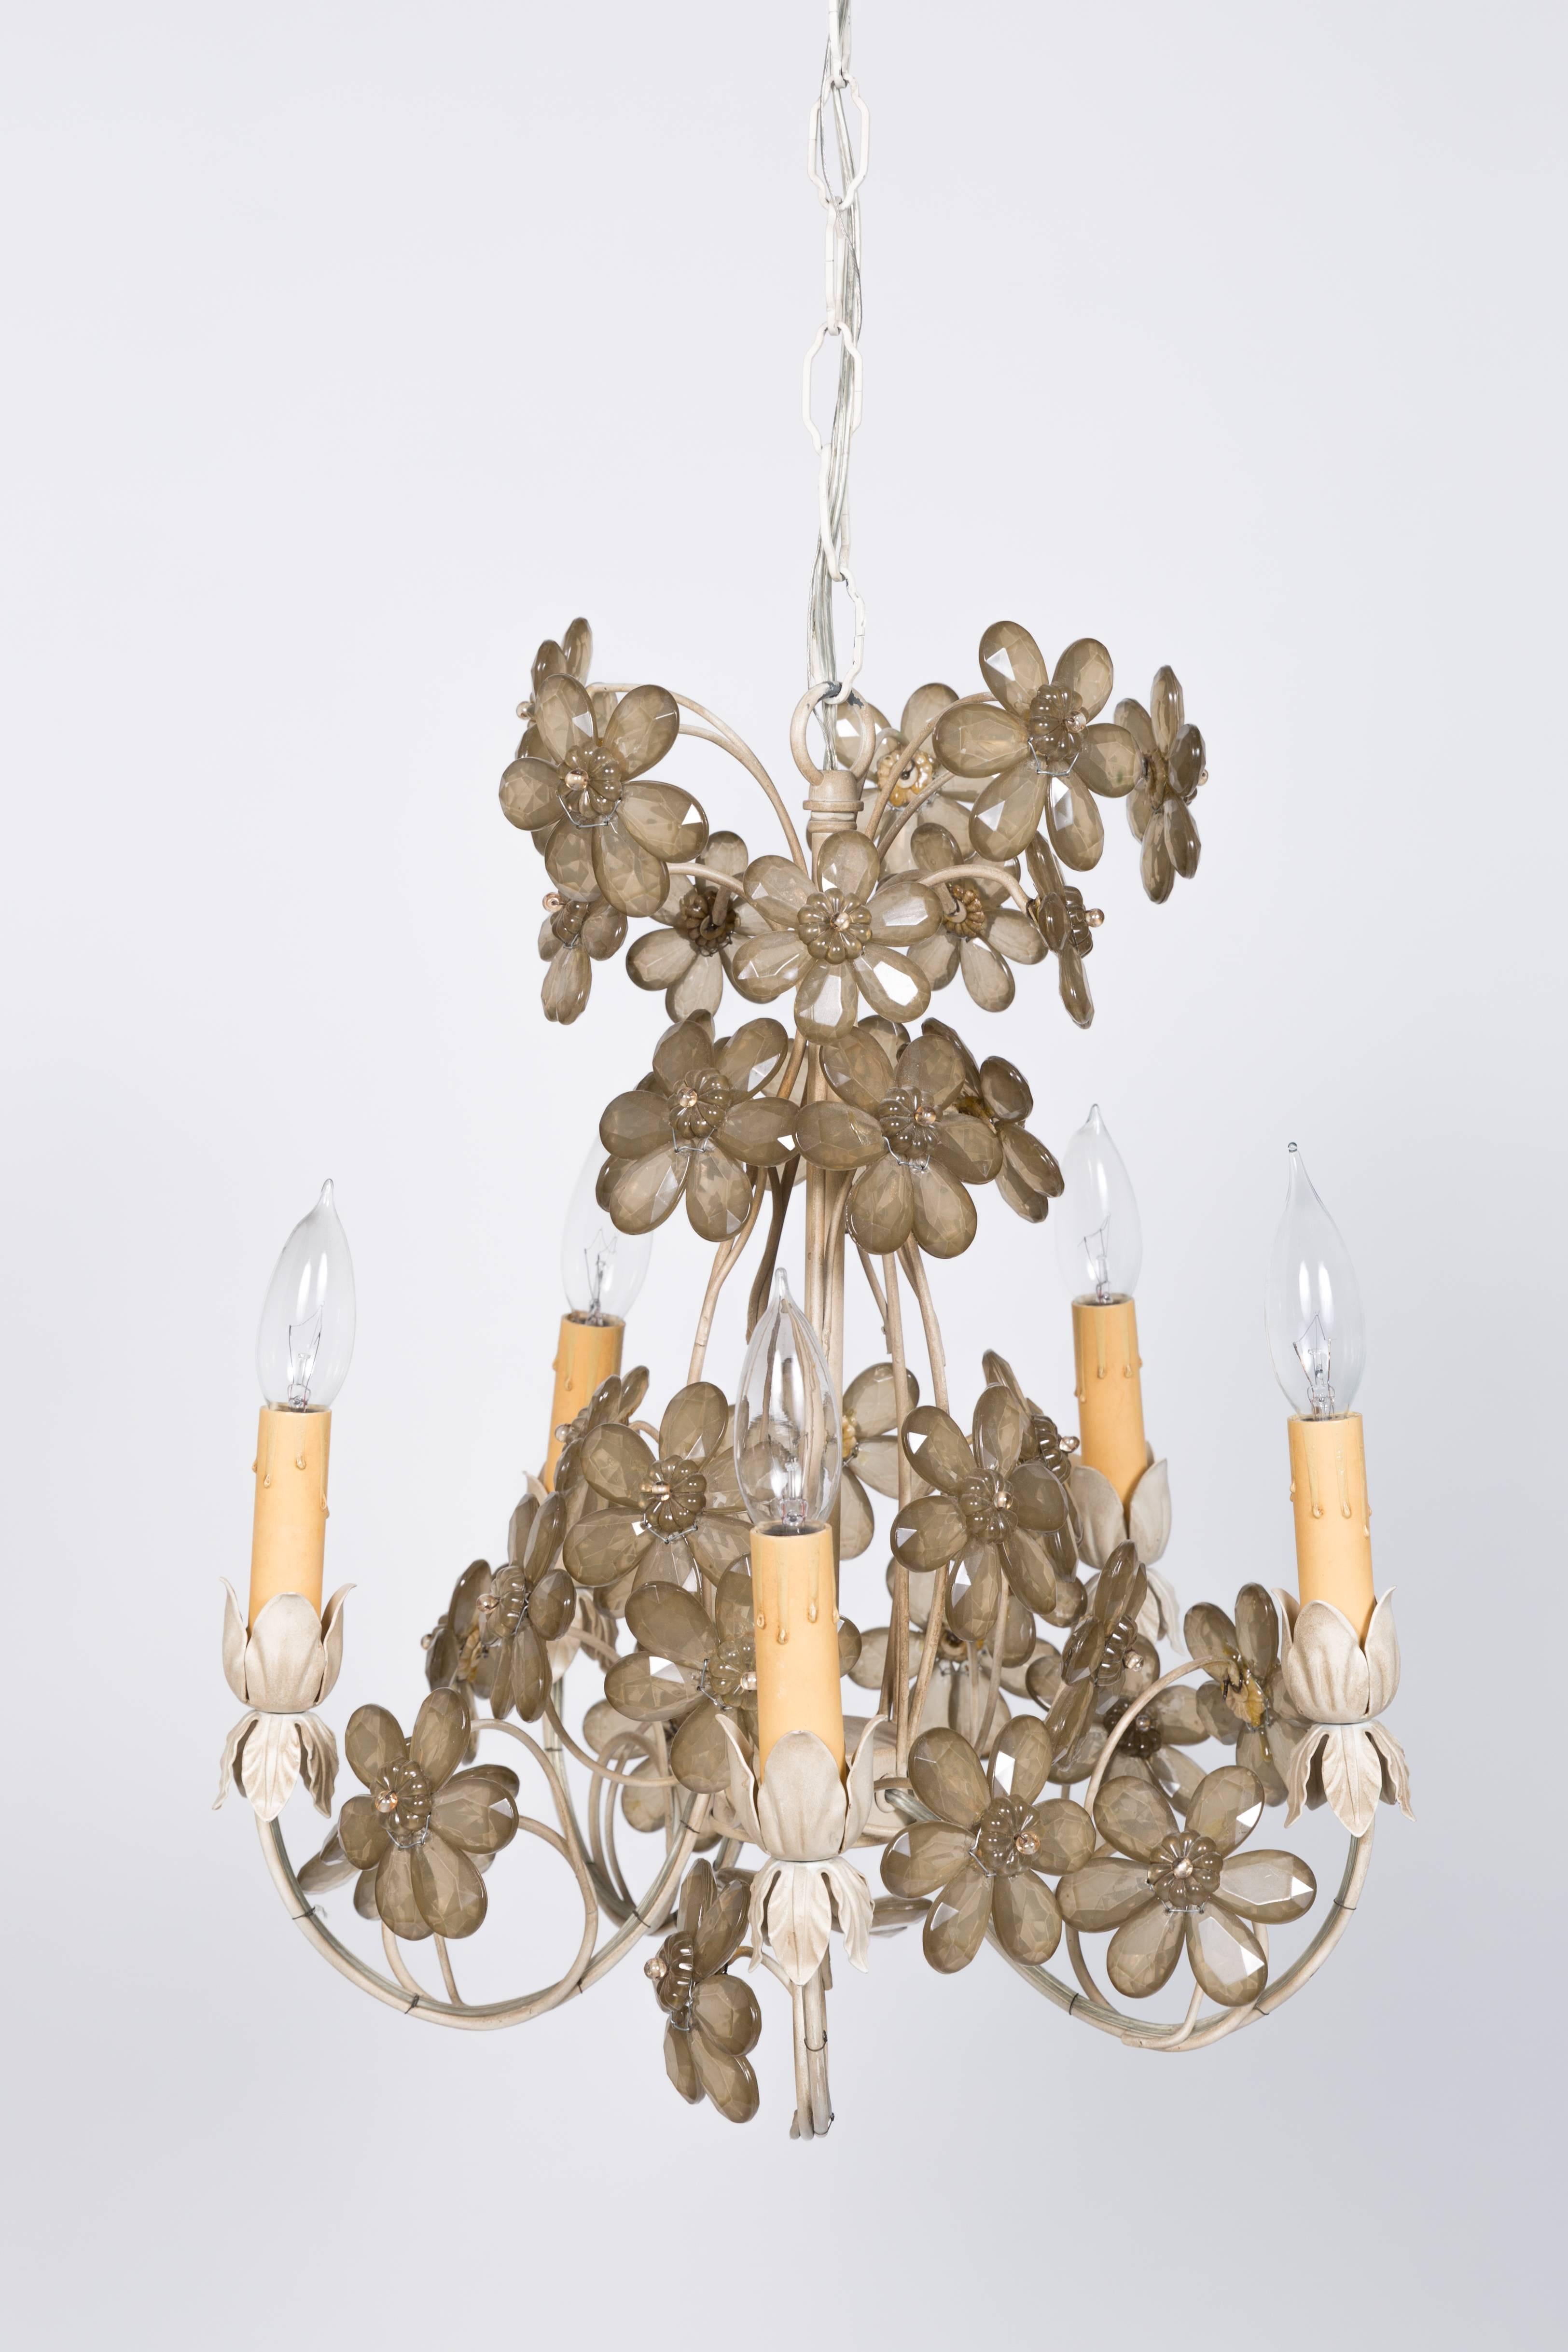 Floral crystal chandelier.
Has original wiring, needs rewiring.